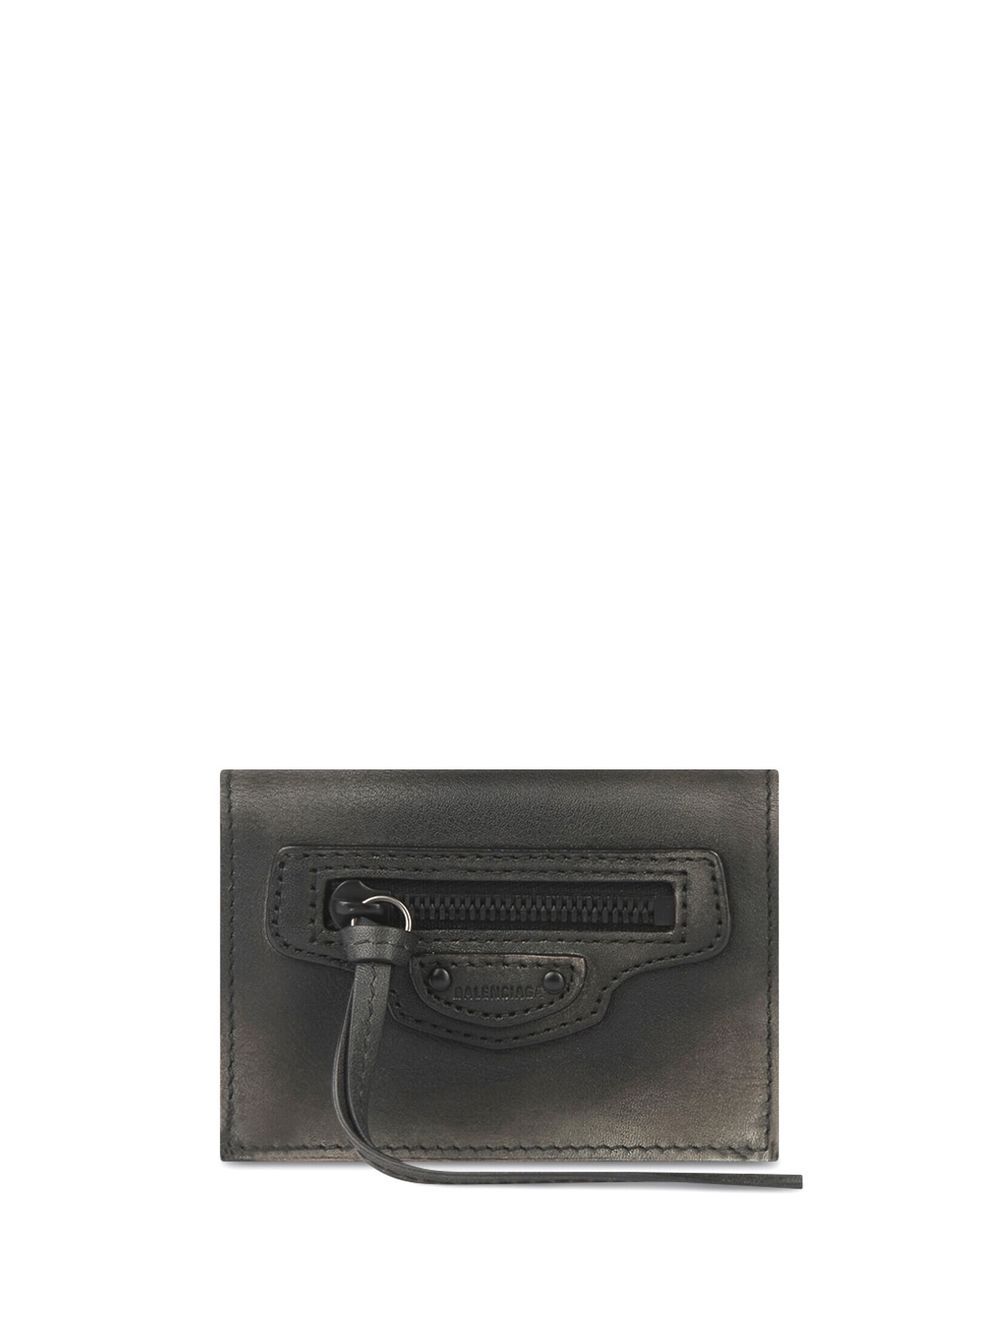 Balenciaga faded-effect folding wallet